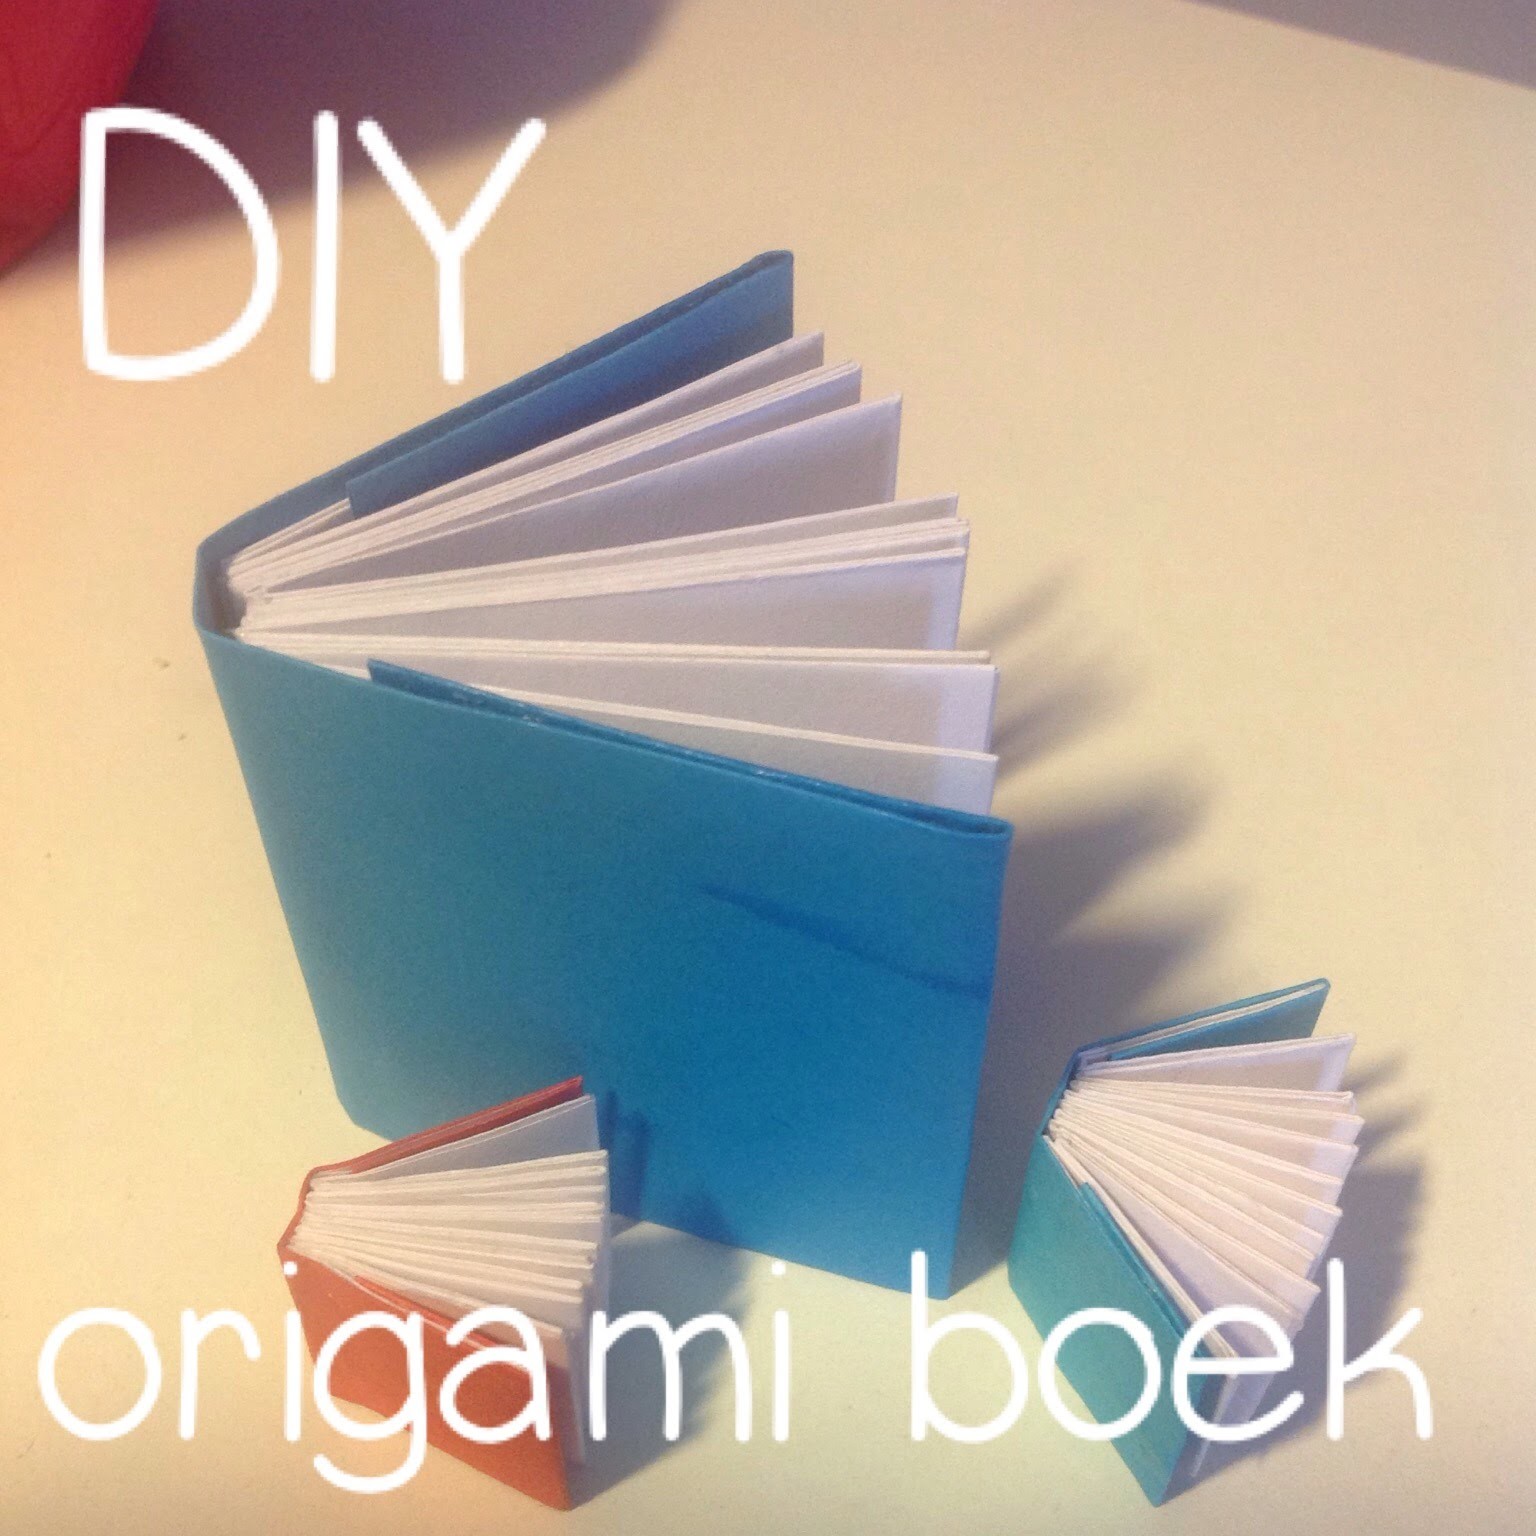 Diy origami boek